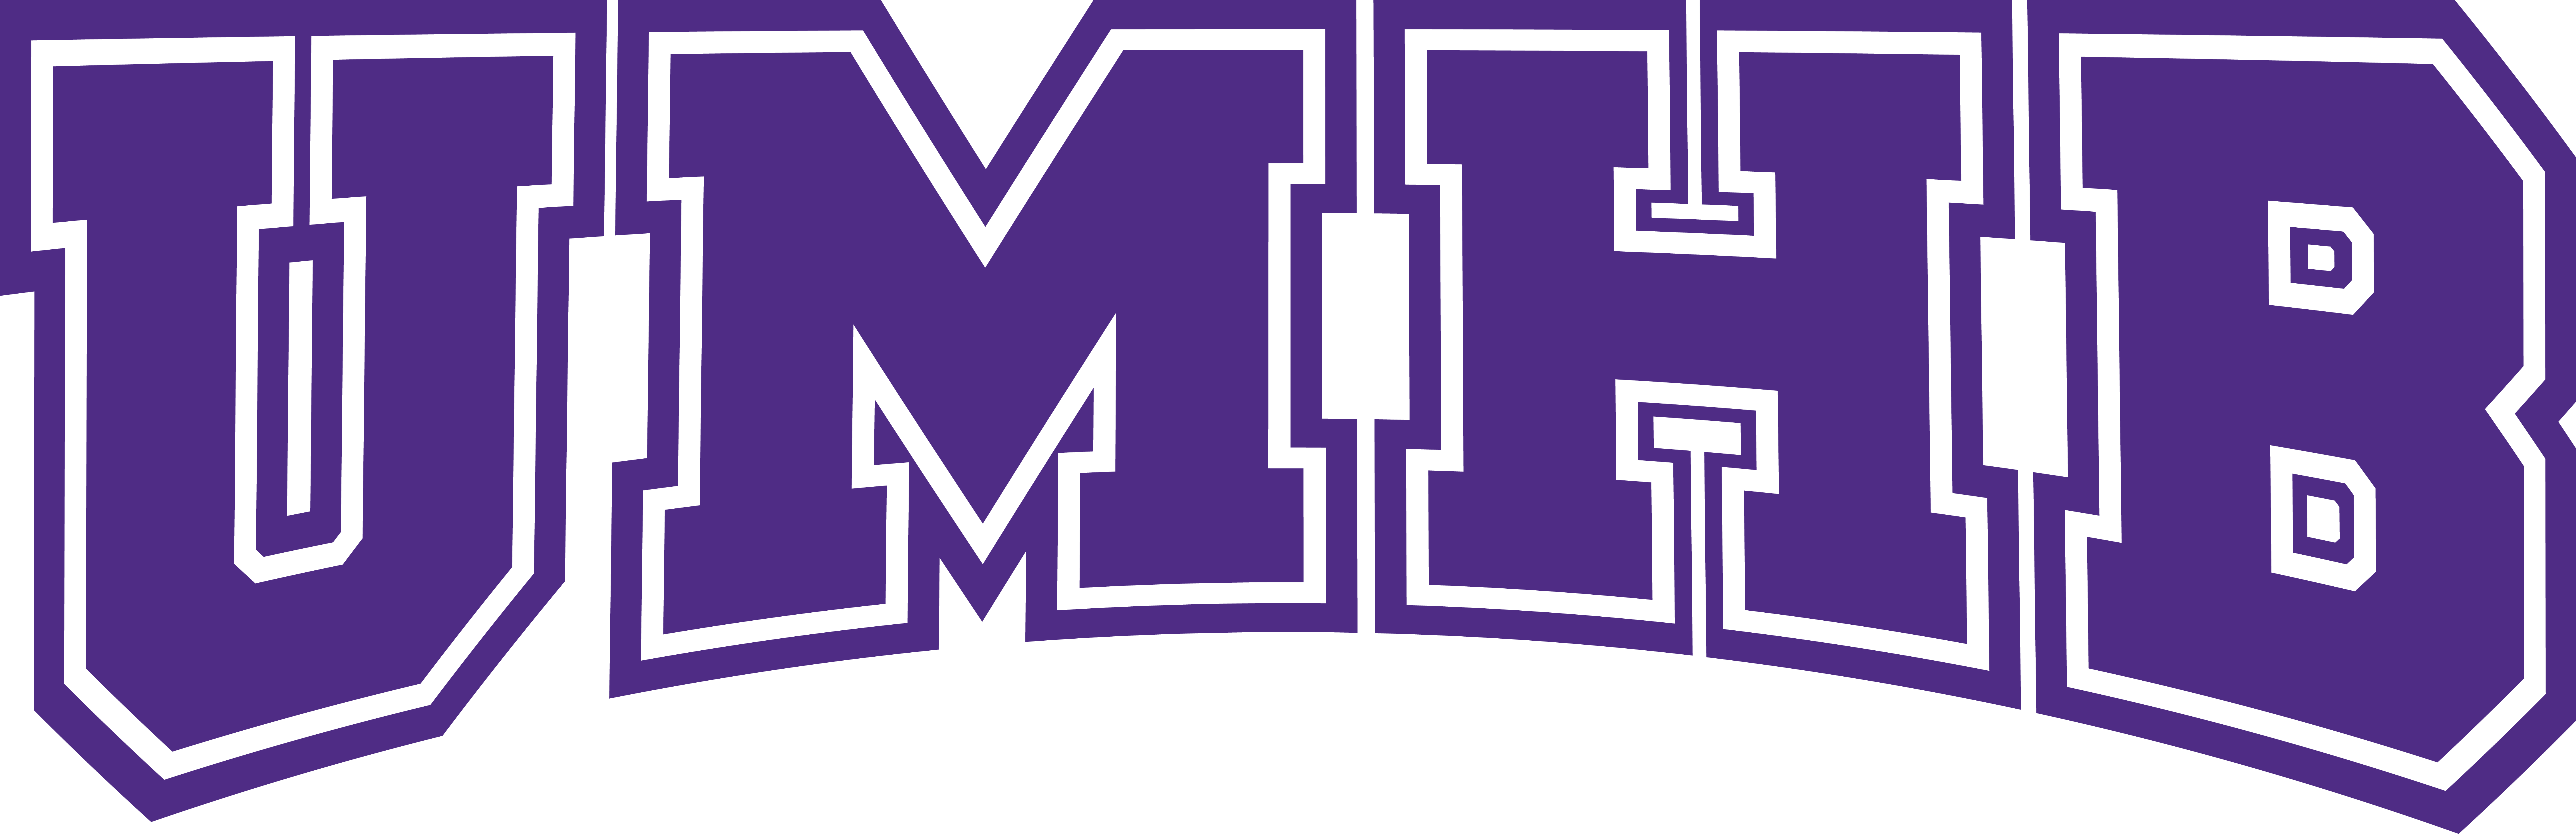  UMHB Spirit logo - color purple